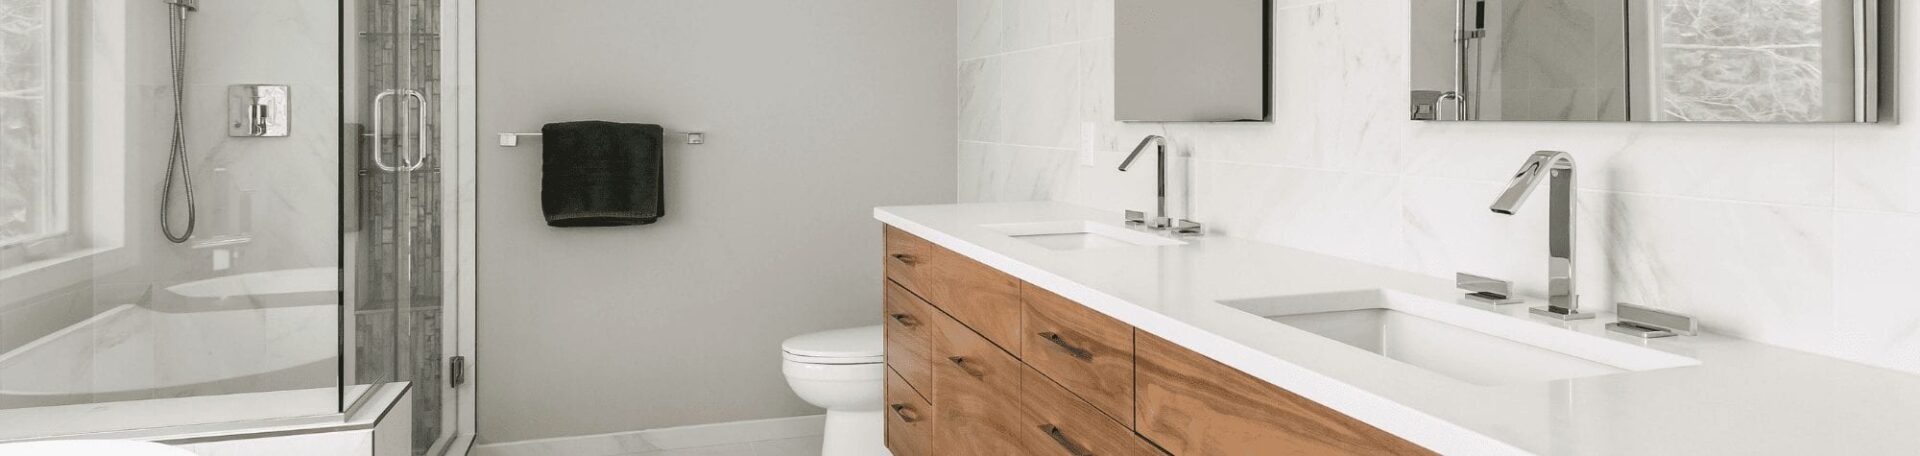 Natural Design Bathroom REmodel with FBC Remodel